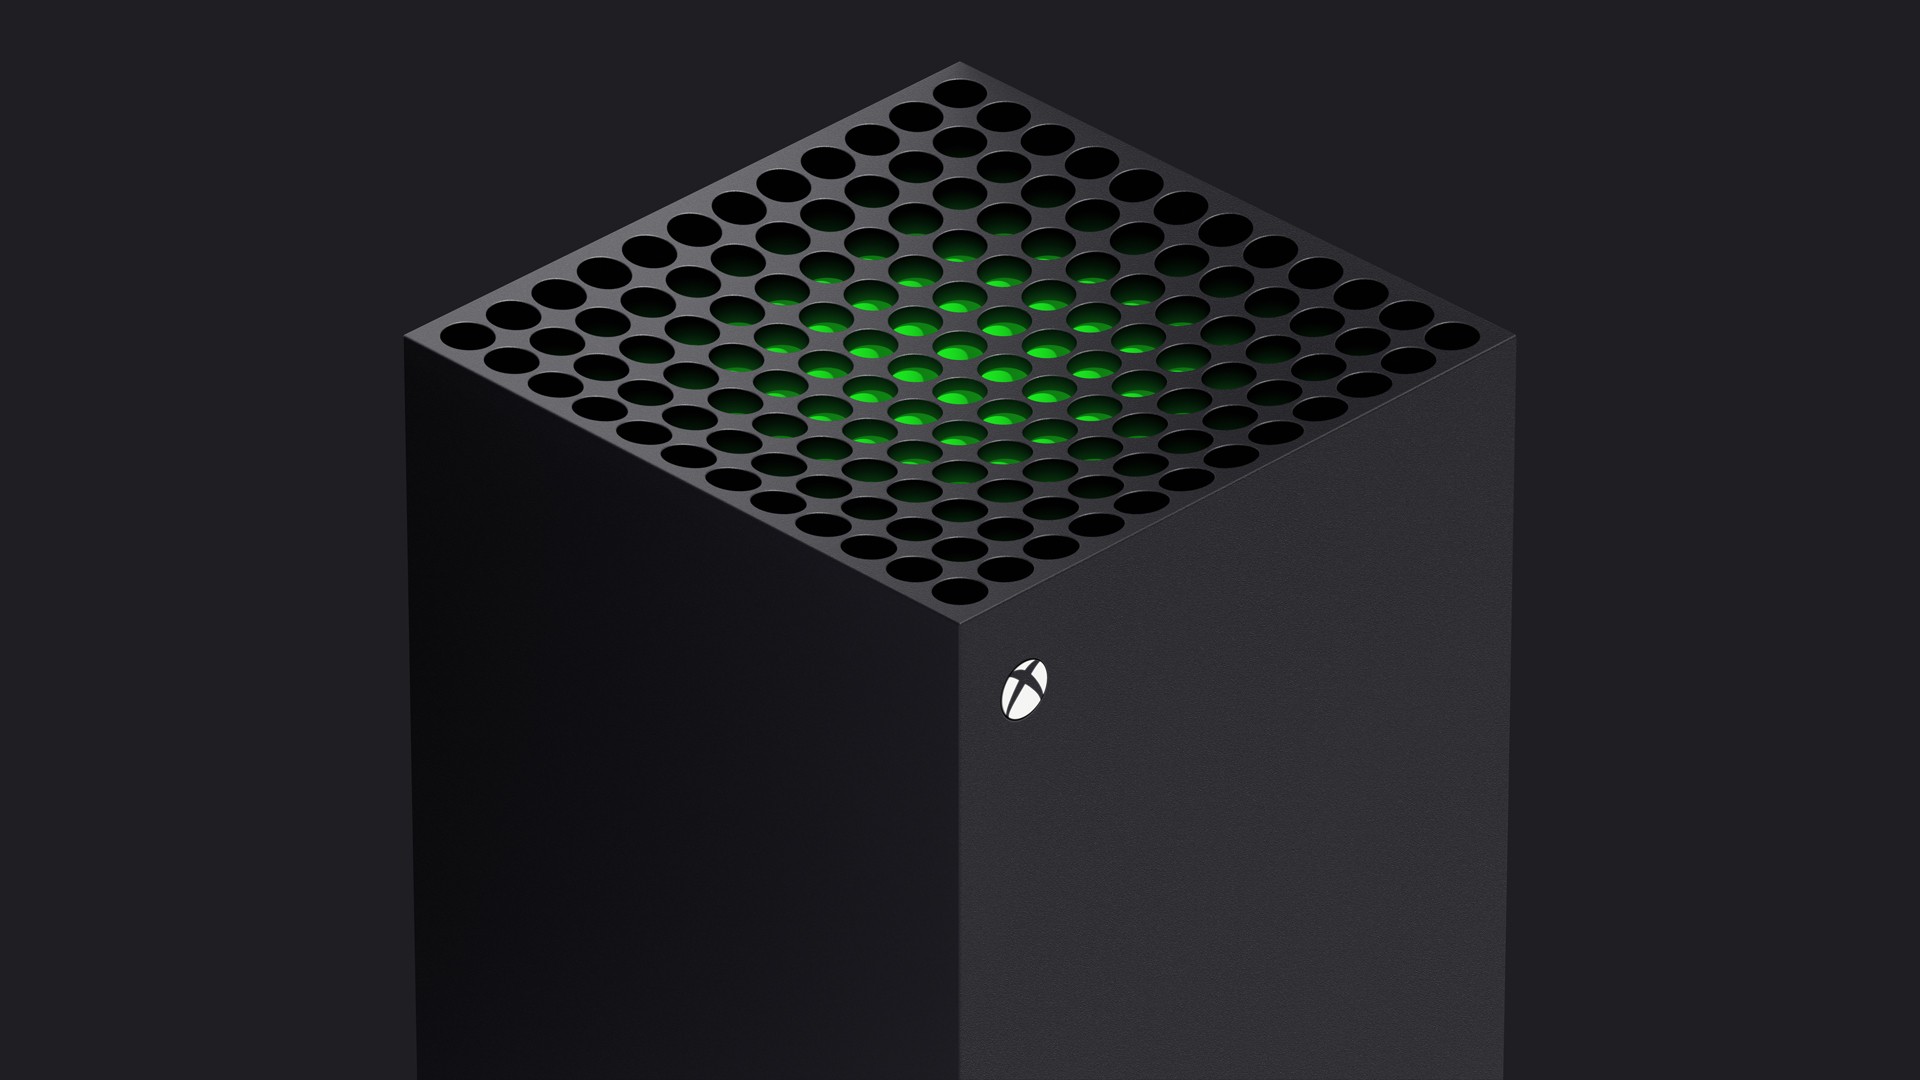 Scorn, exclusivo da Xbox Series X/S, mostra-se em breve teaser